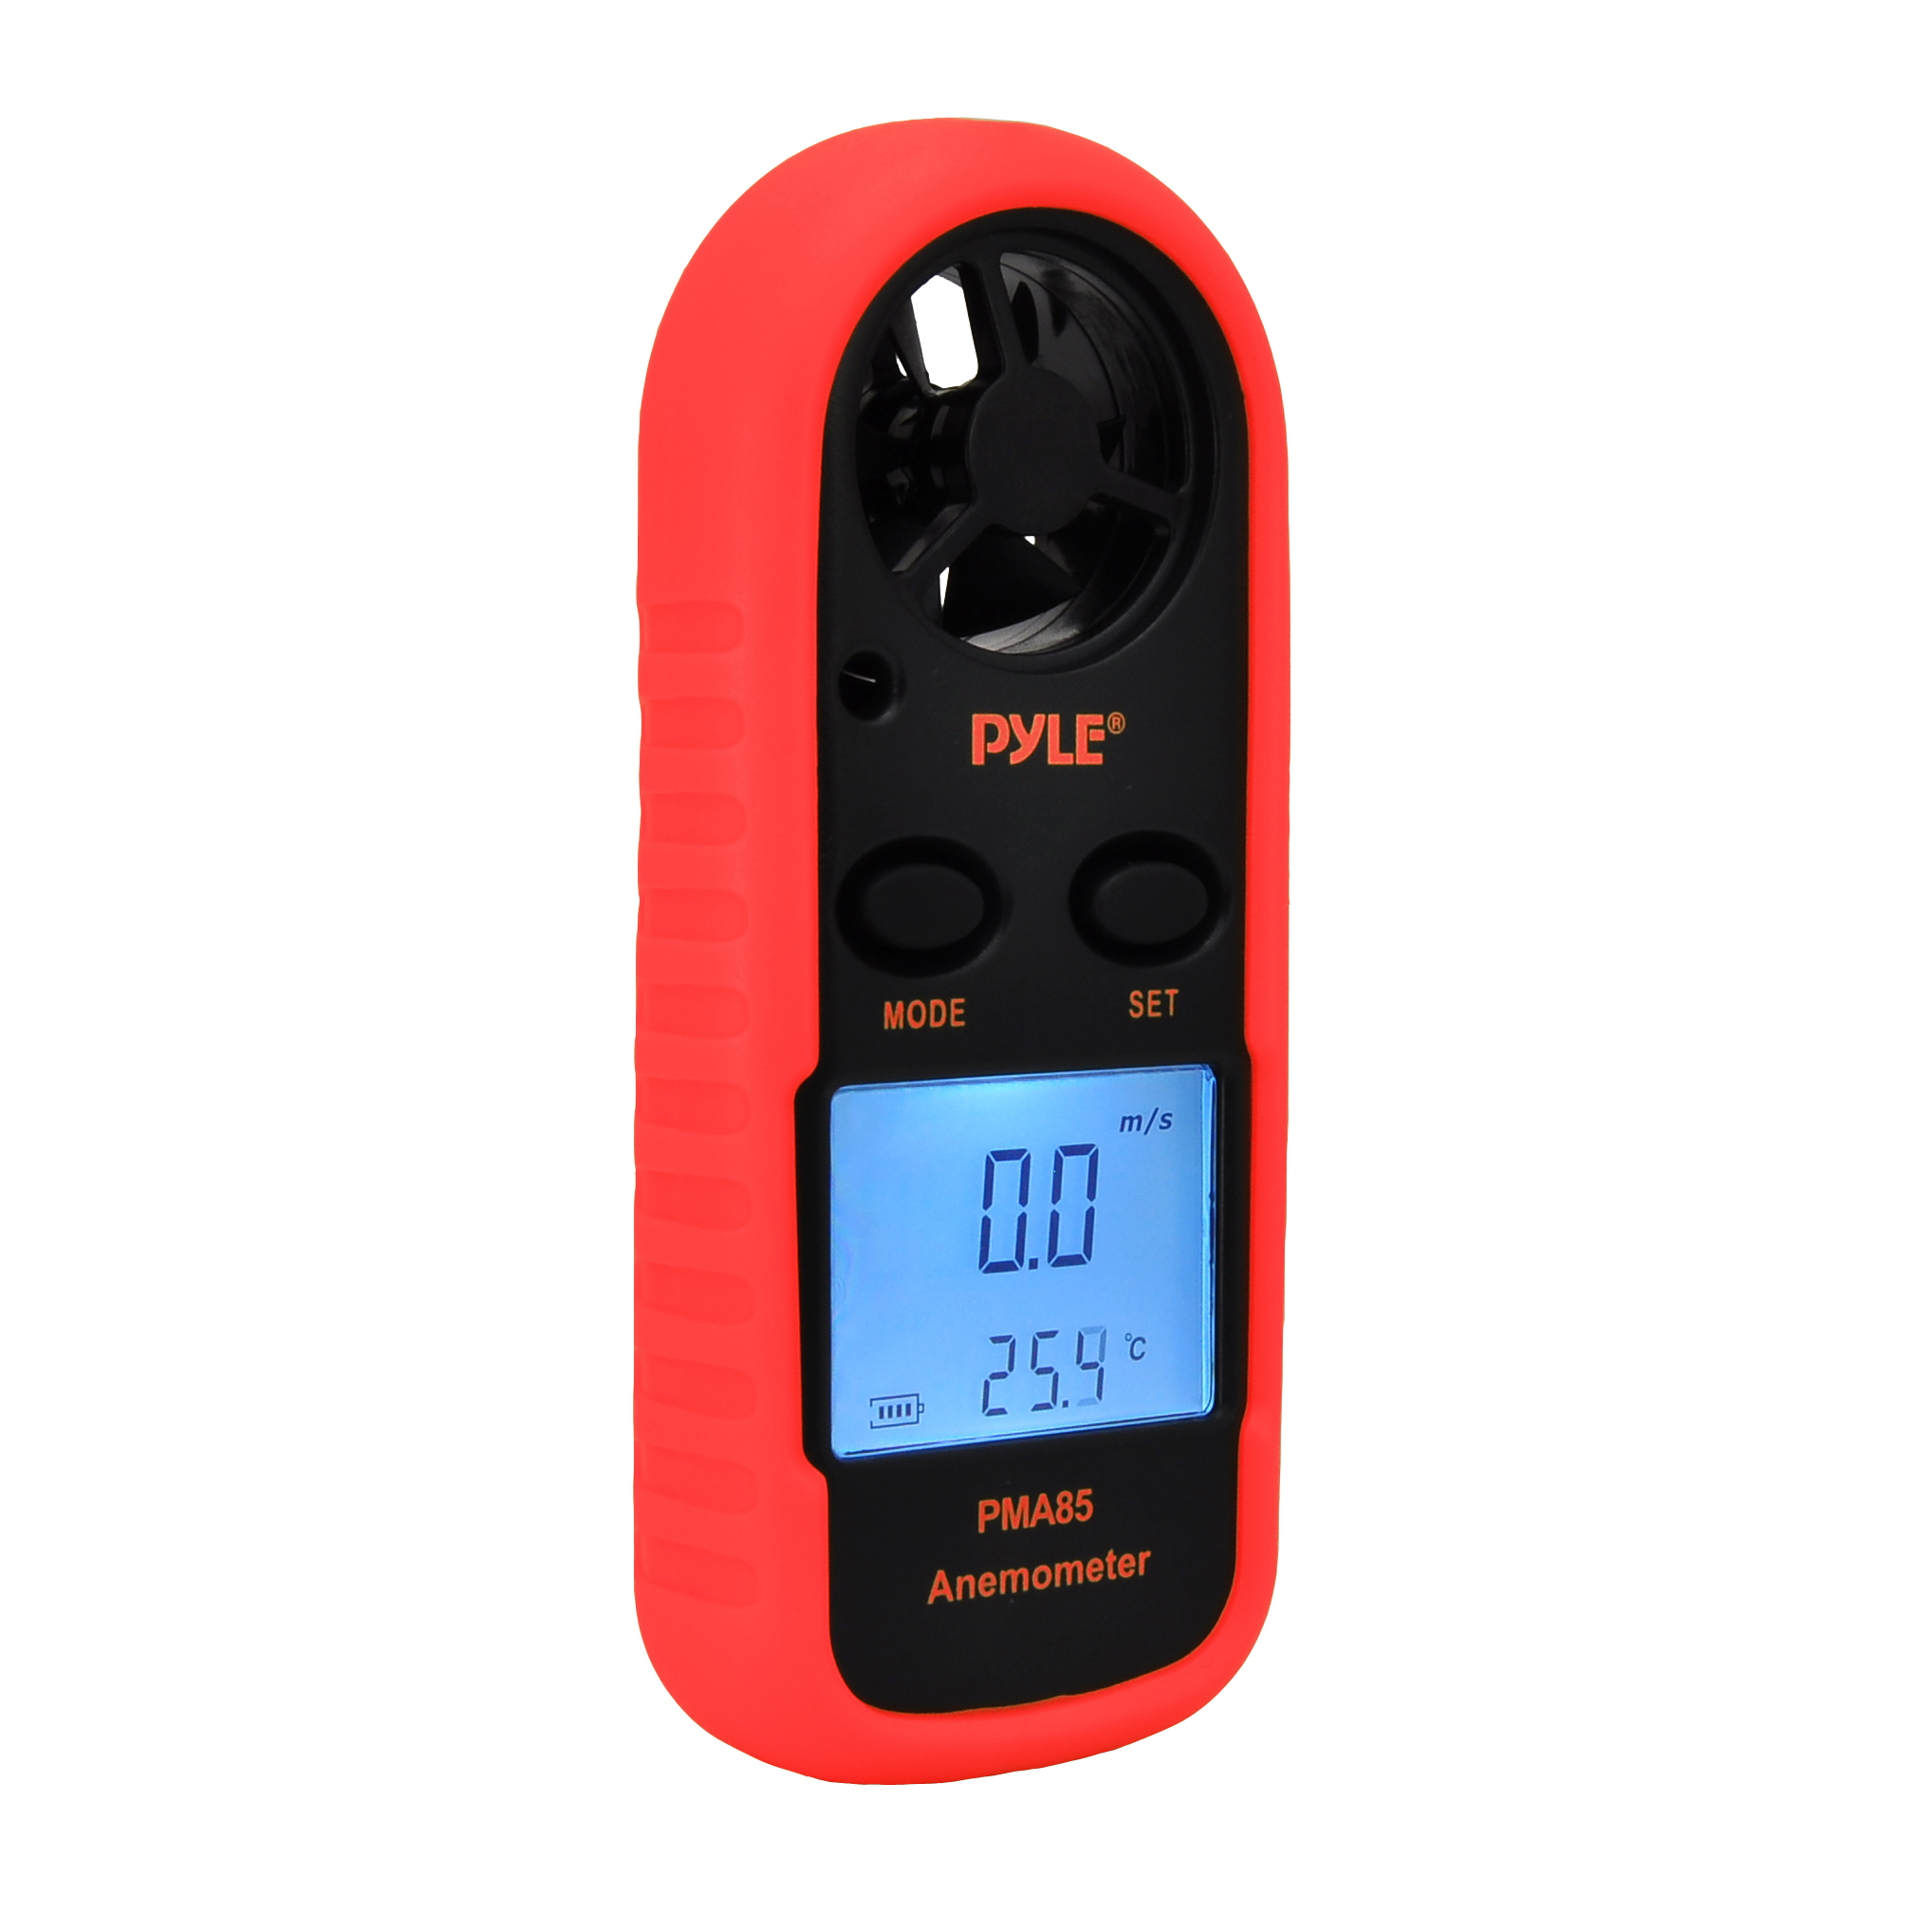 Pma85 Digital Anemometer - Measures Wind And Temperature